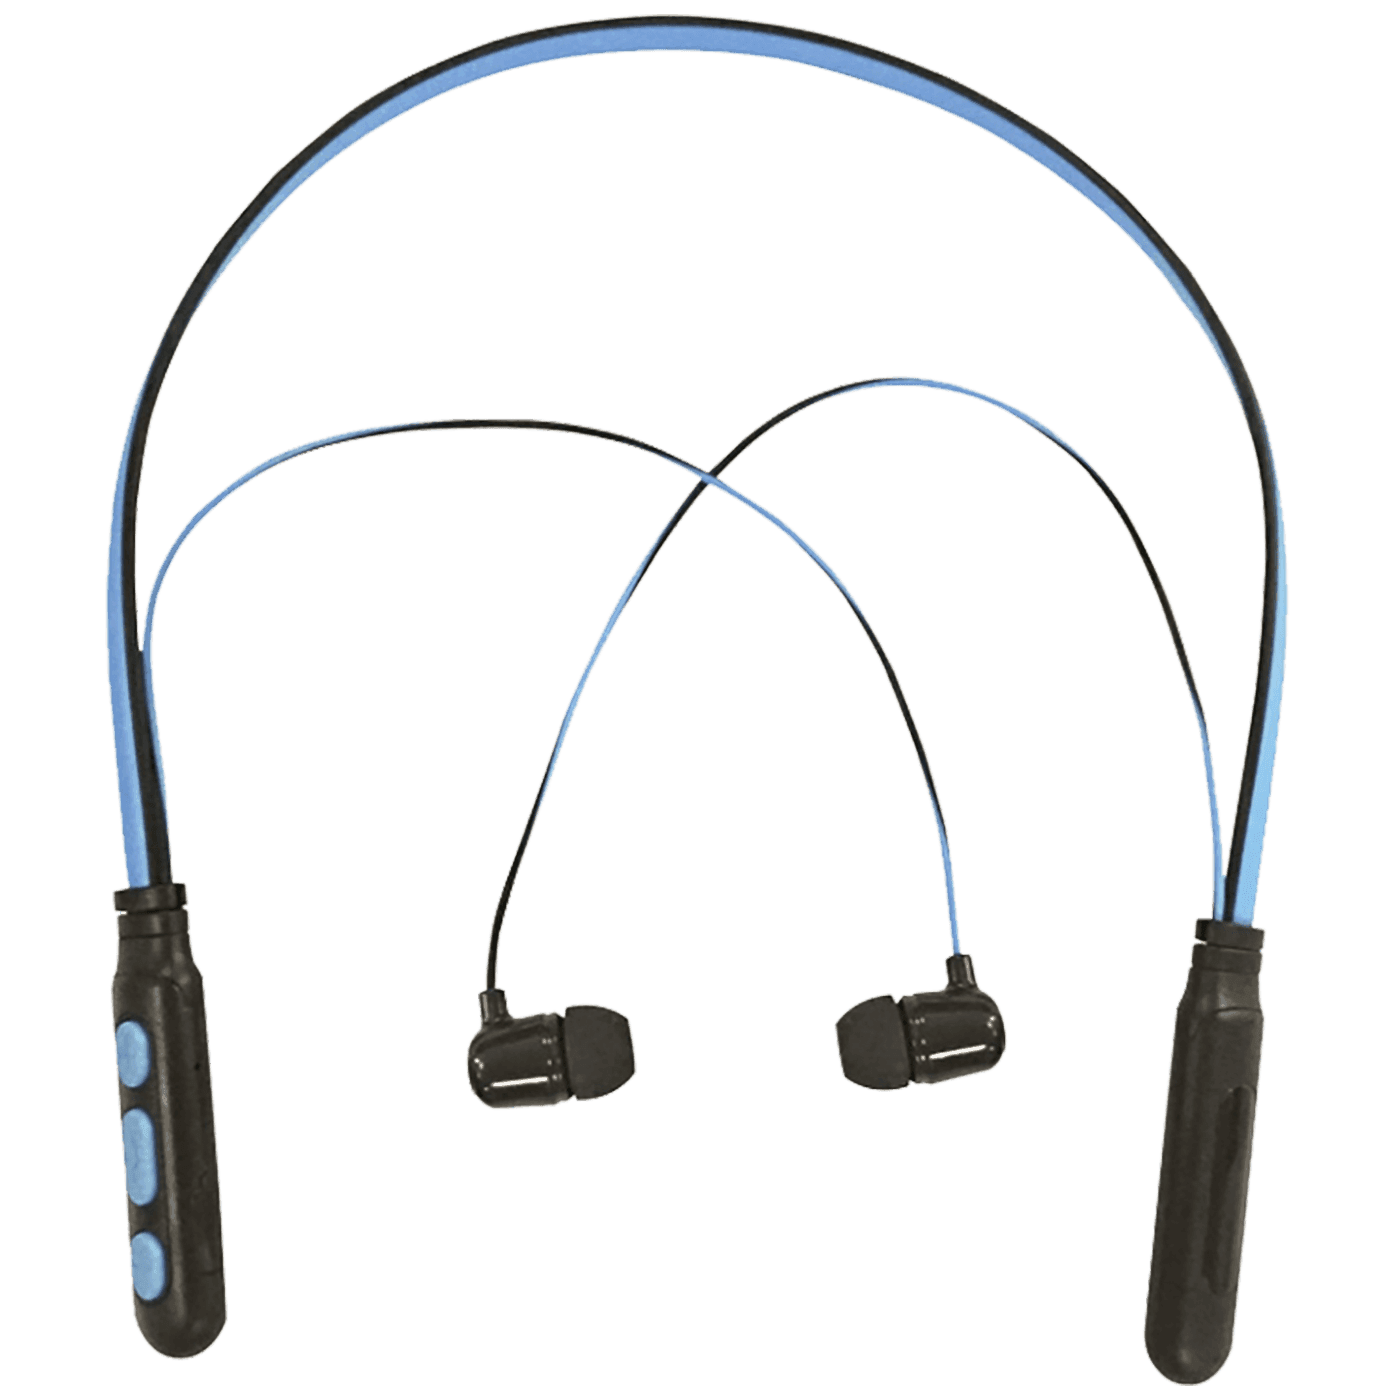 MEANIT Bluetooth slušalice sa mikrofonom B12 plave